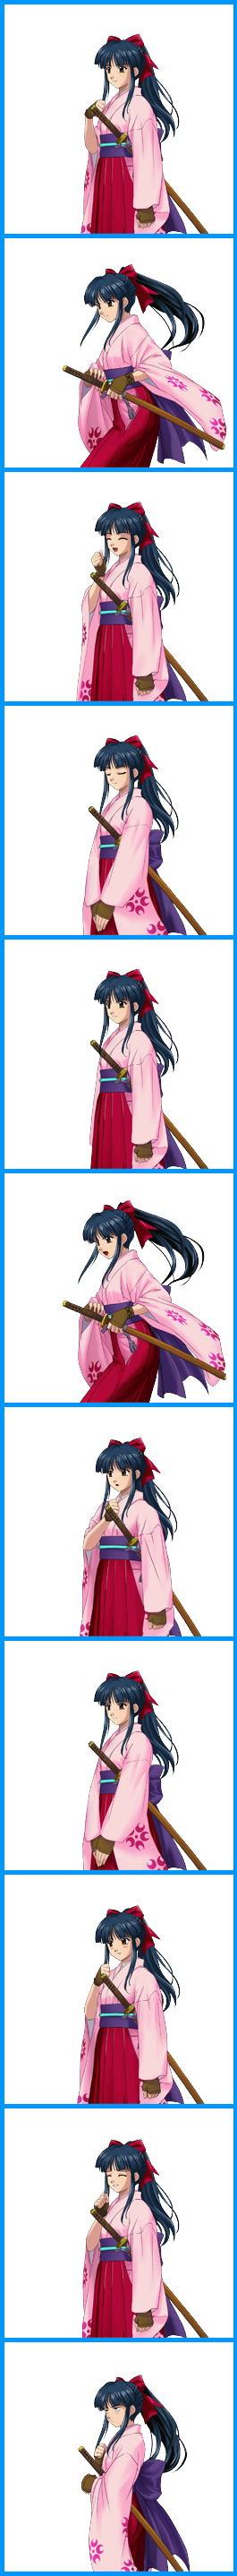 Sakura Shinguji